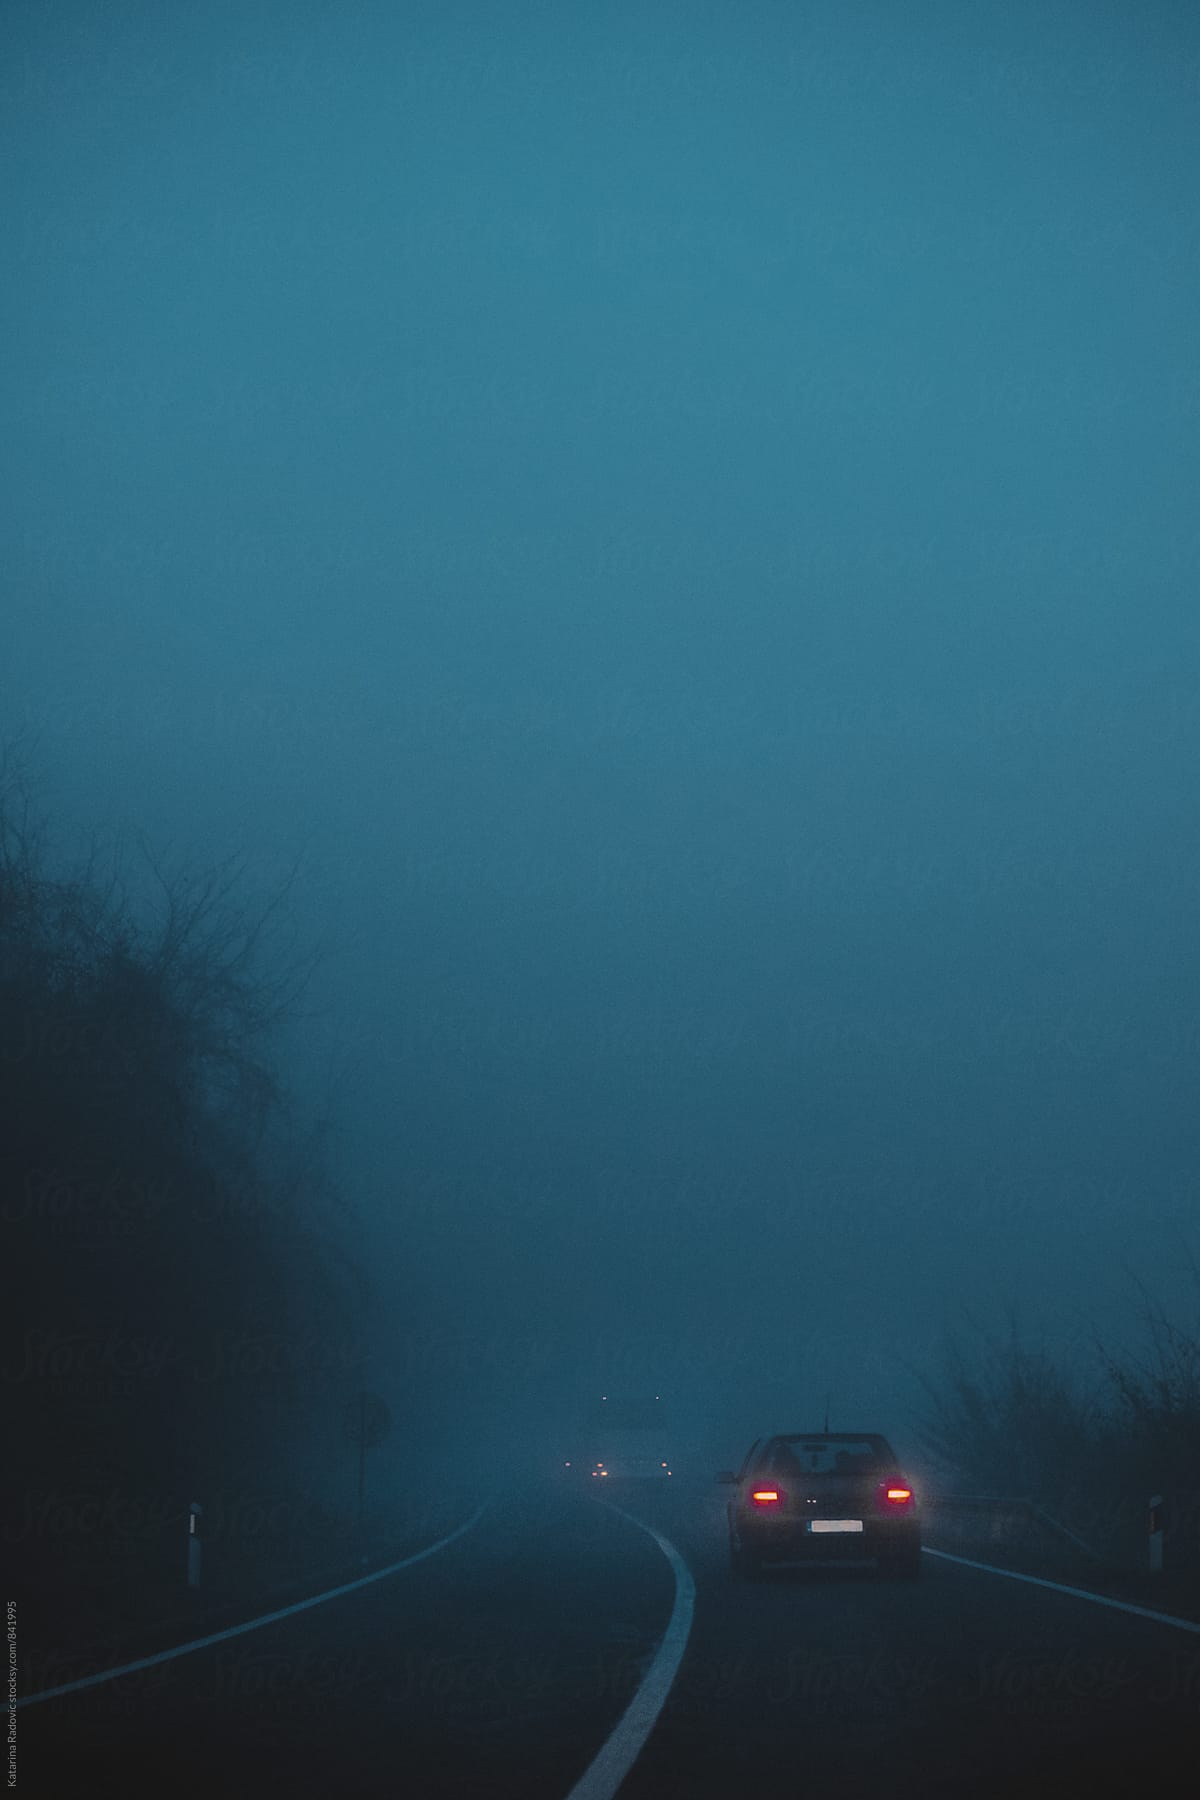 Car on the Road in a Dark Blue Night